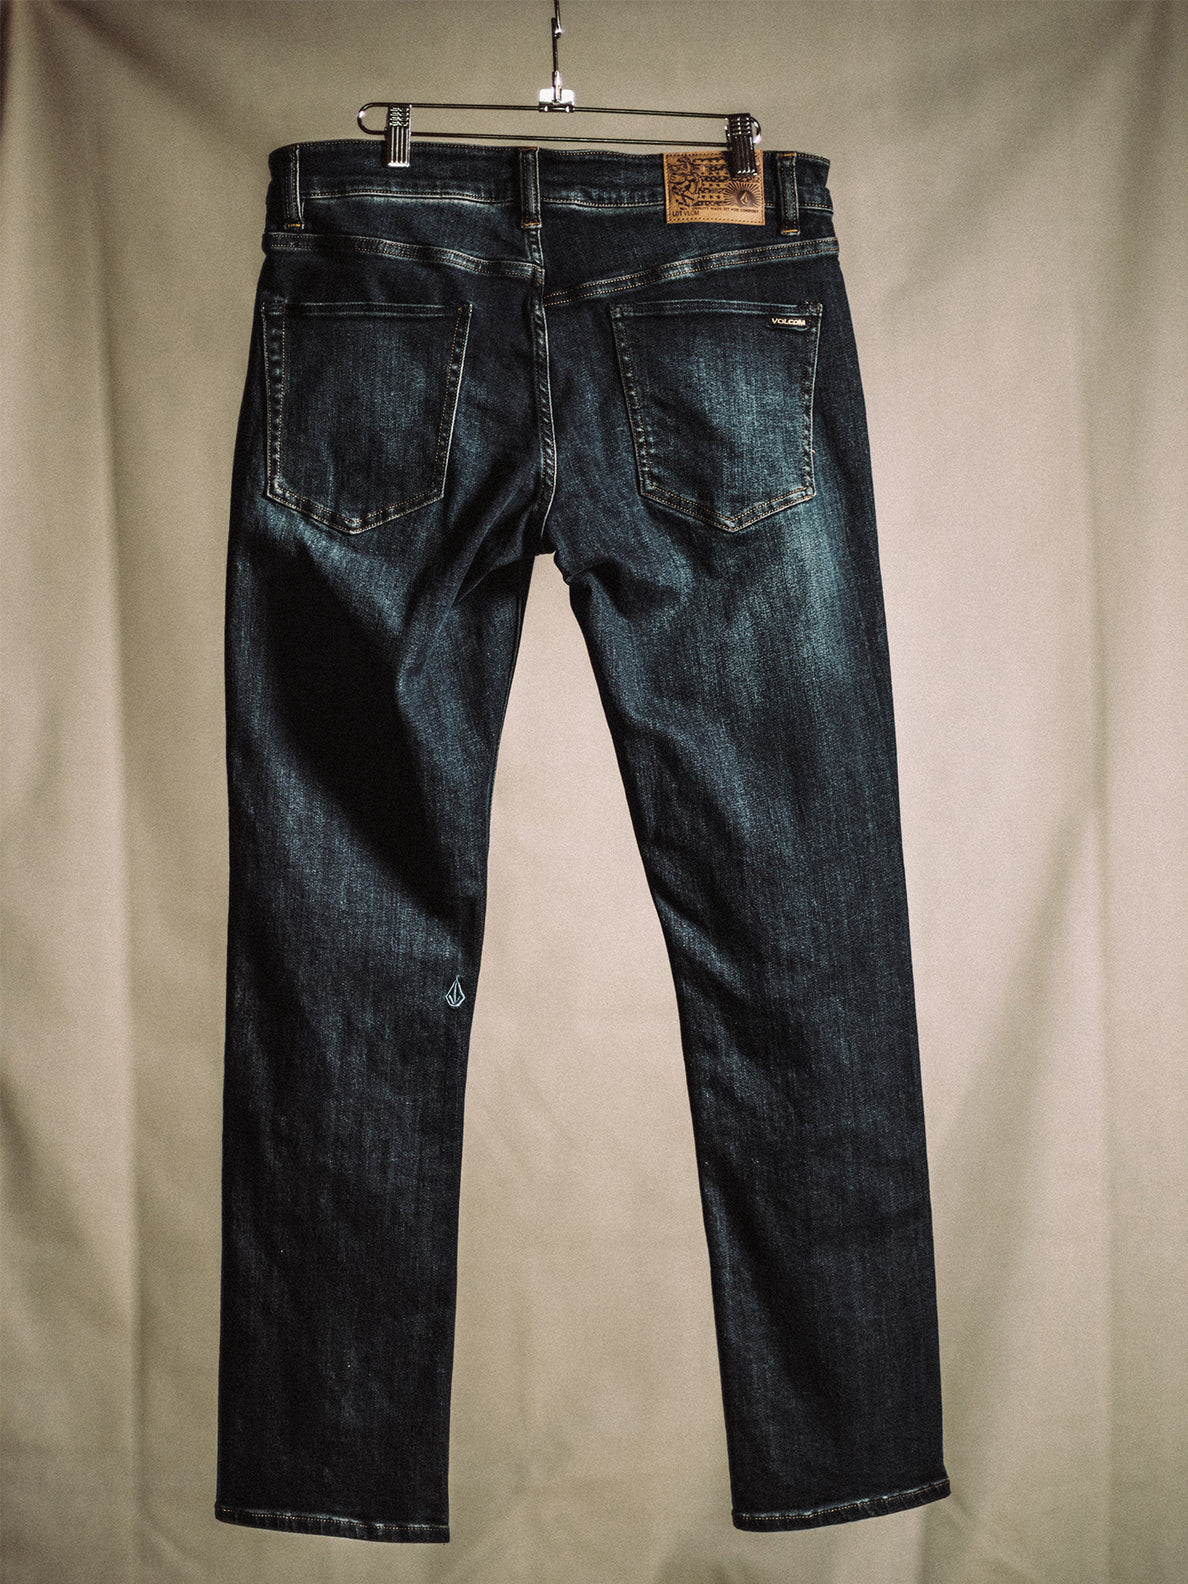 Vorta Slim Fit Jeans - Vintage Blue